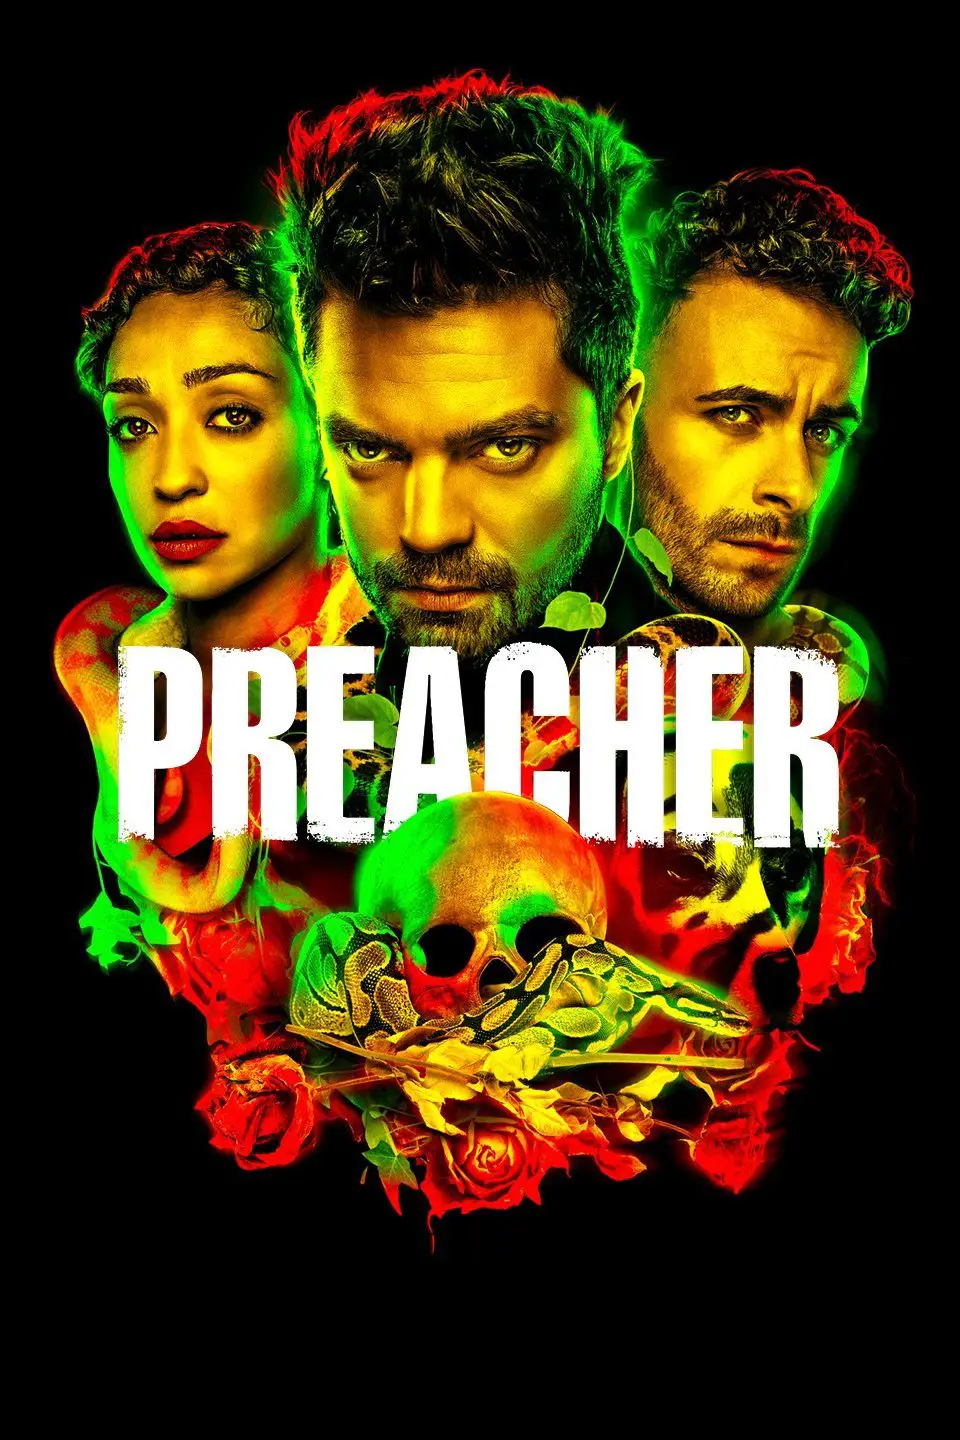 Preacher Season 3 | Reactions | LIVING LIFE FEARLESS